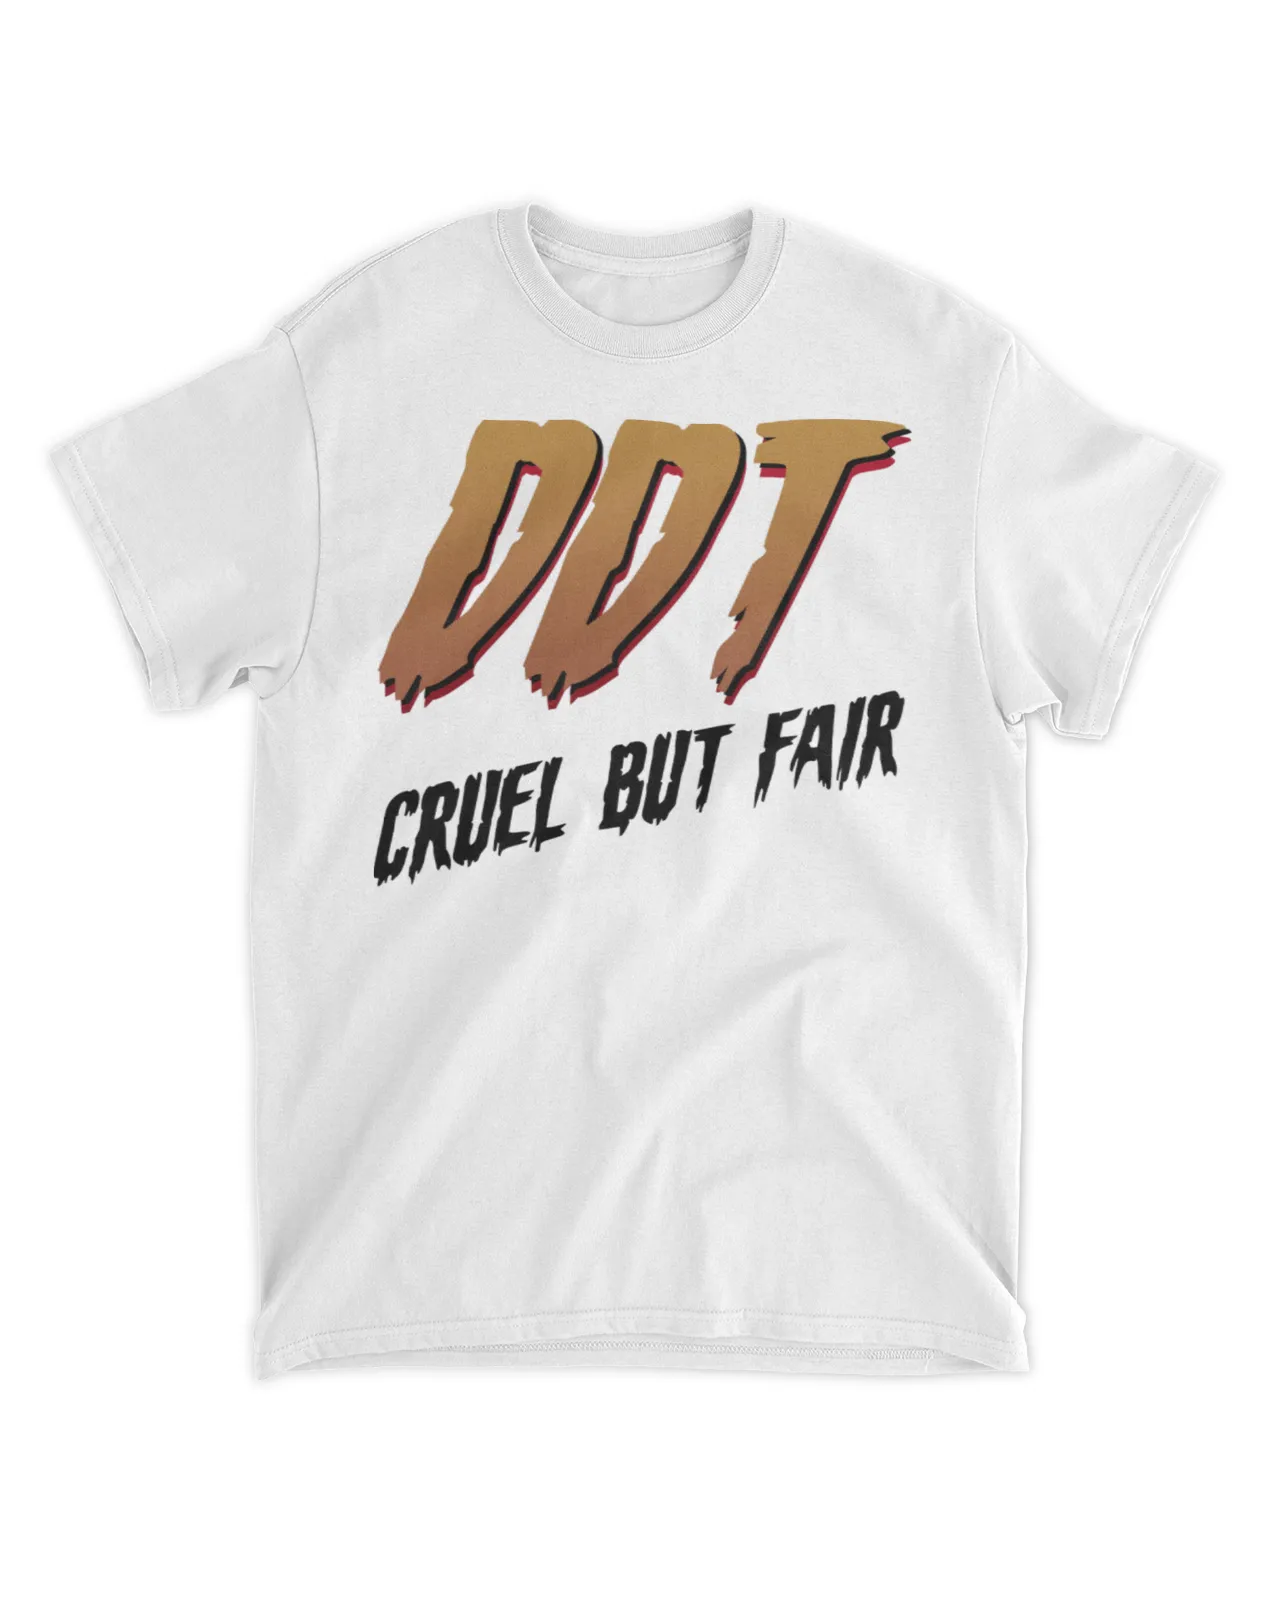  DDT cruel but fair shirt